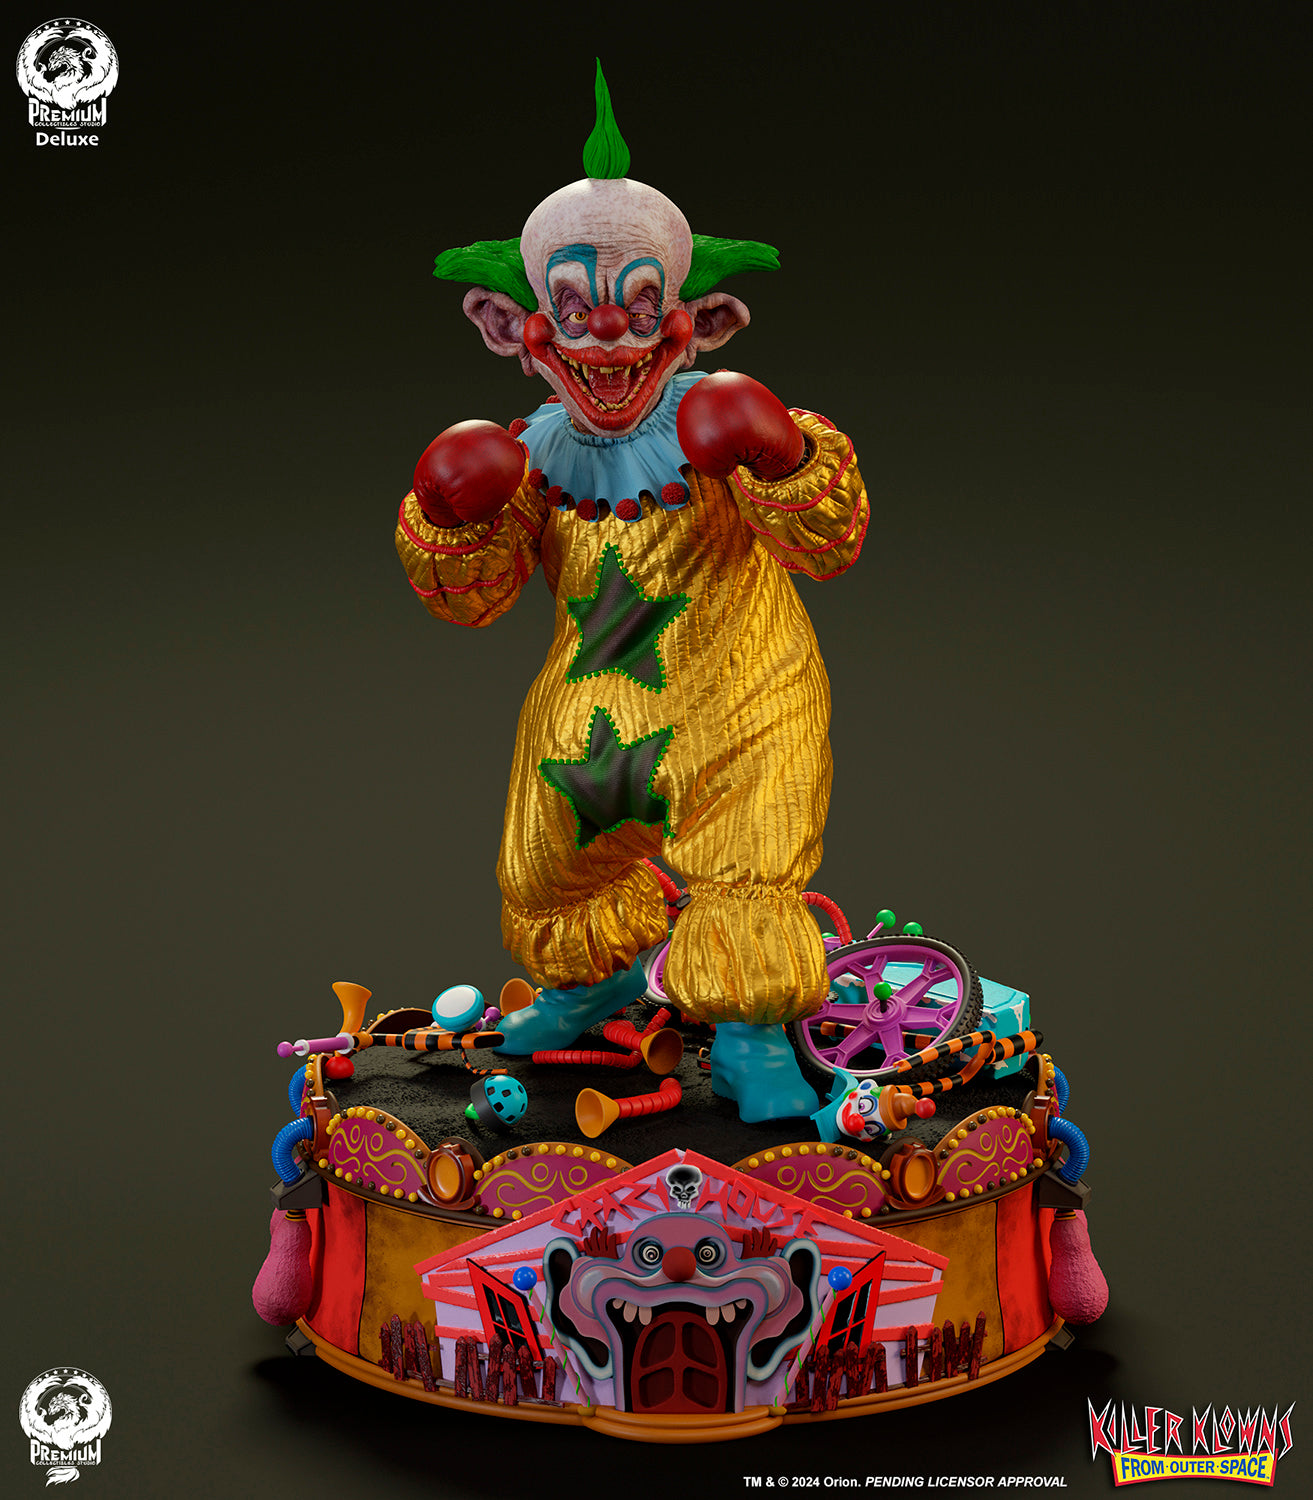 PRE-ORDER Shorty Deluxe Edition Quarter Scale Statue Killer Klowns